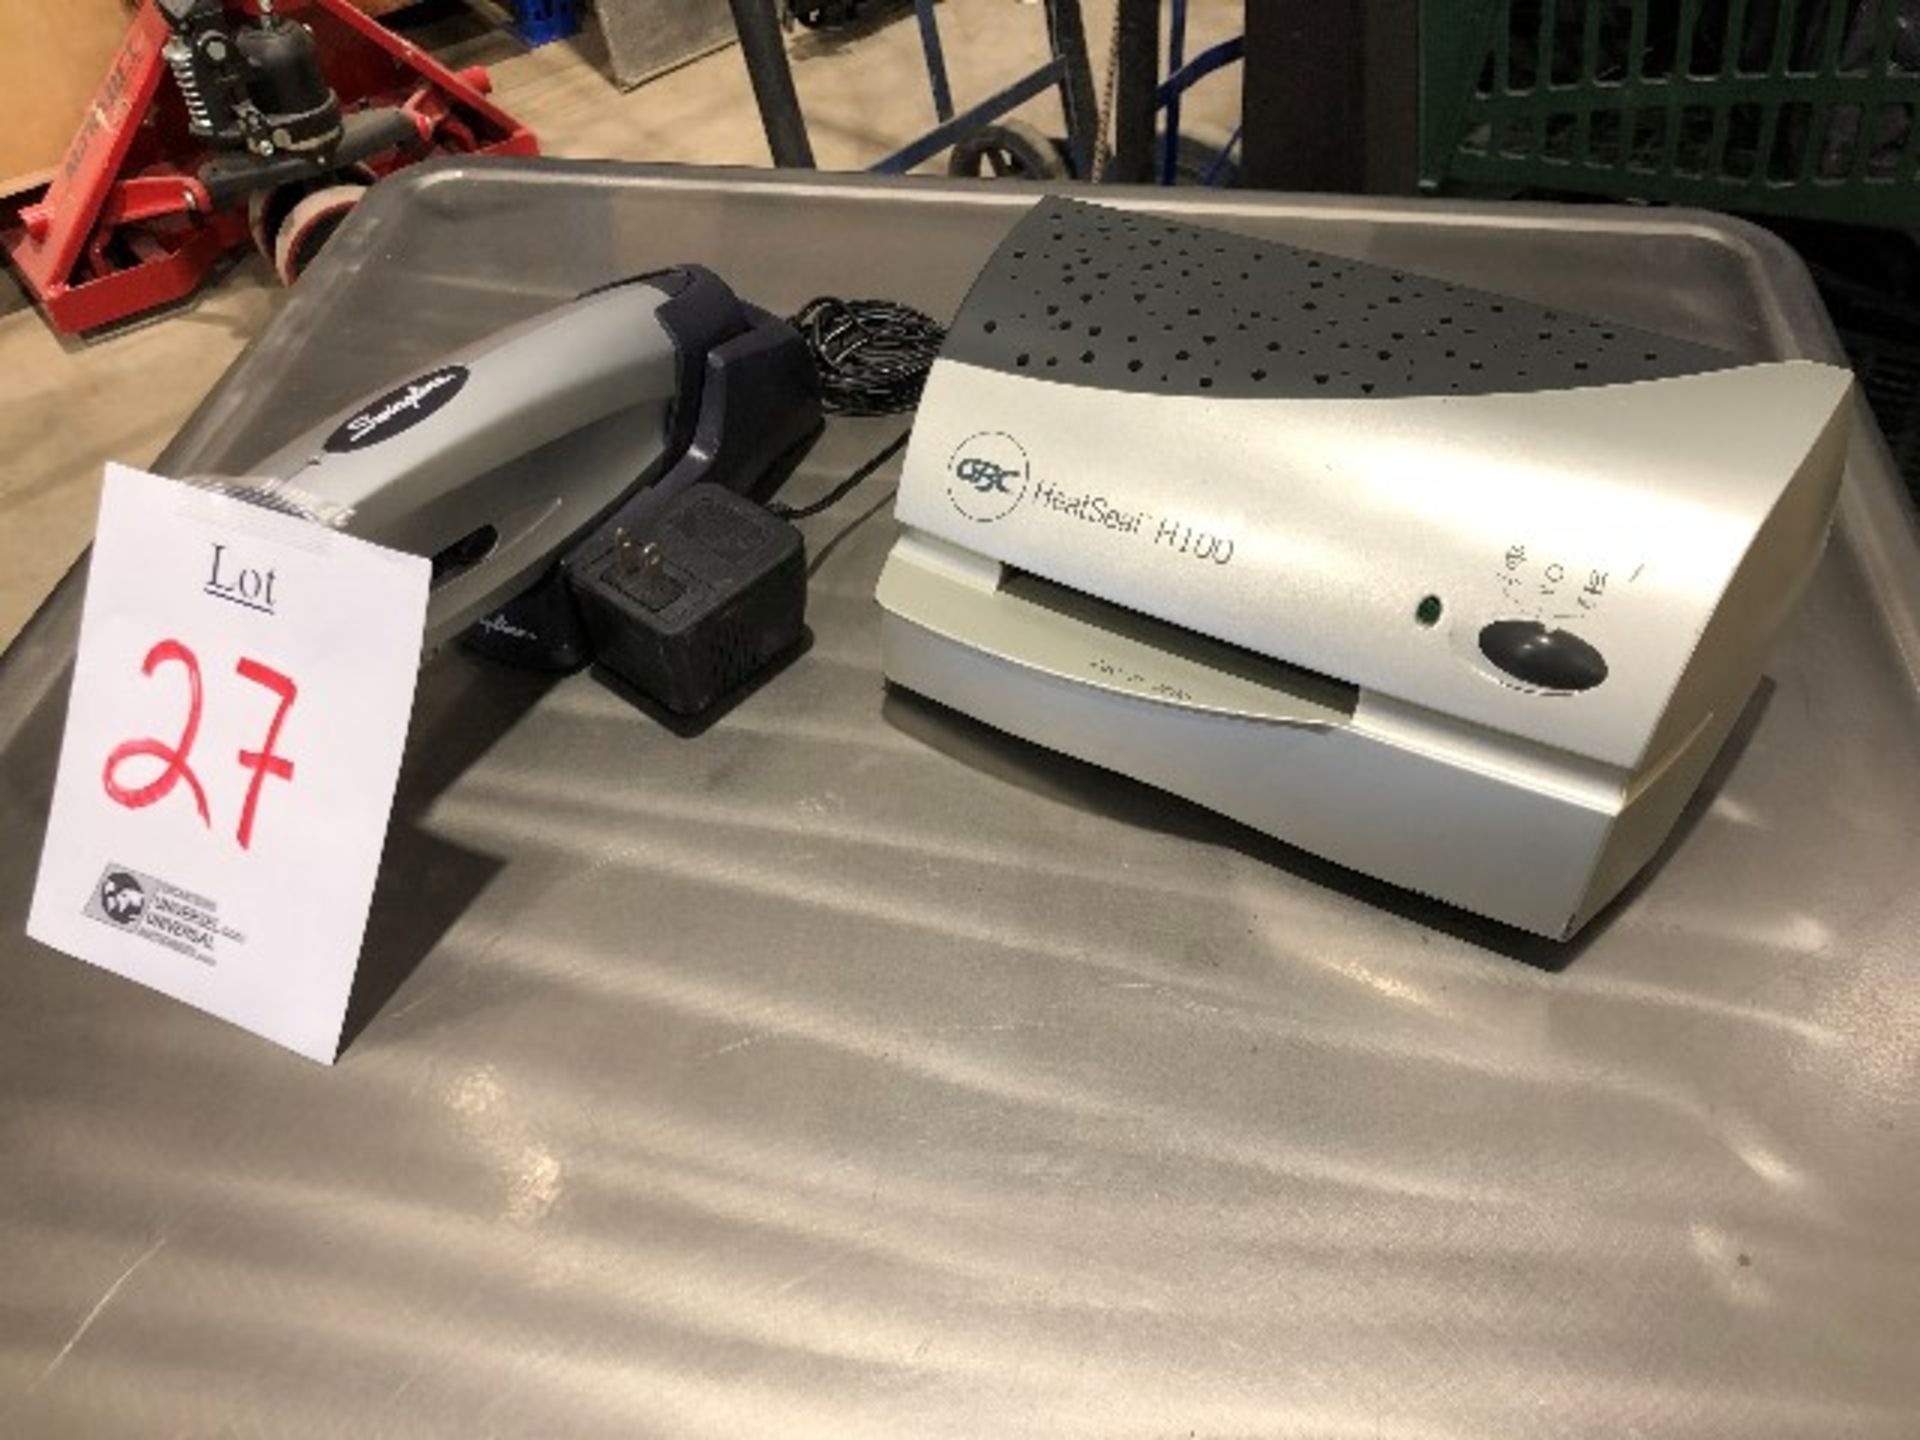 Electric stapler & heat seal unit, 2pcs (Lot)